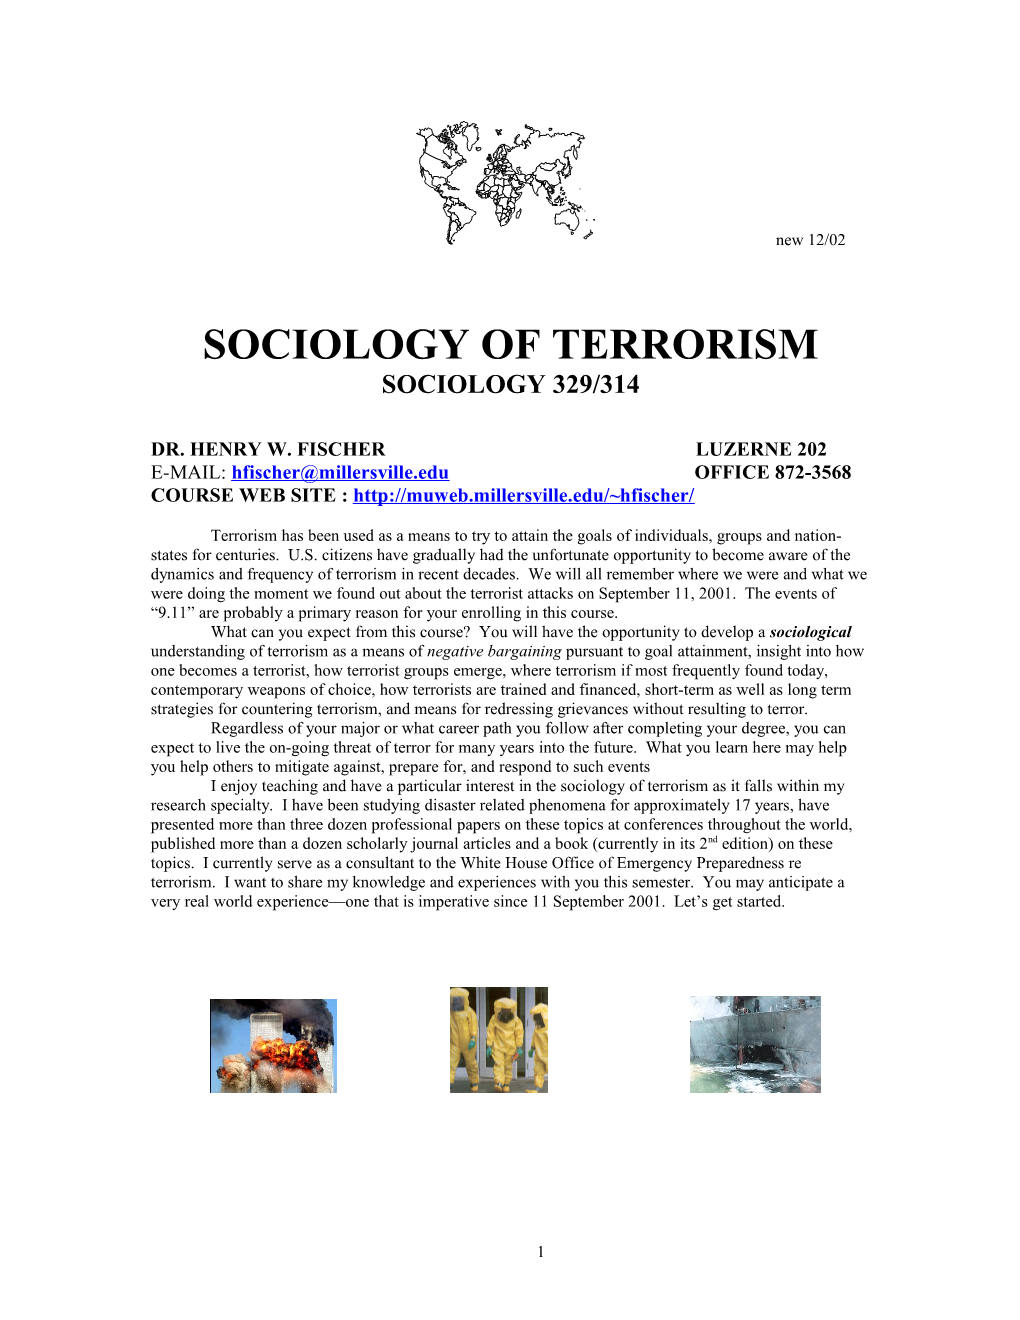 The Sociology of Terrorism